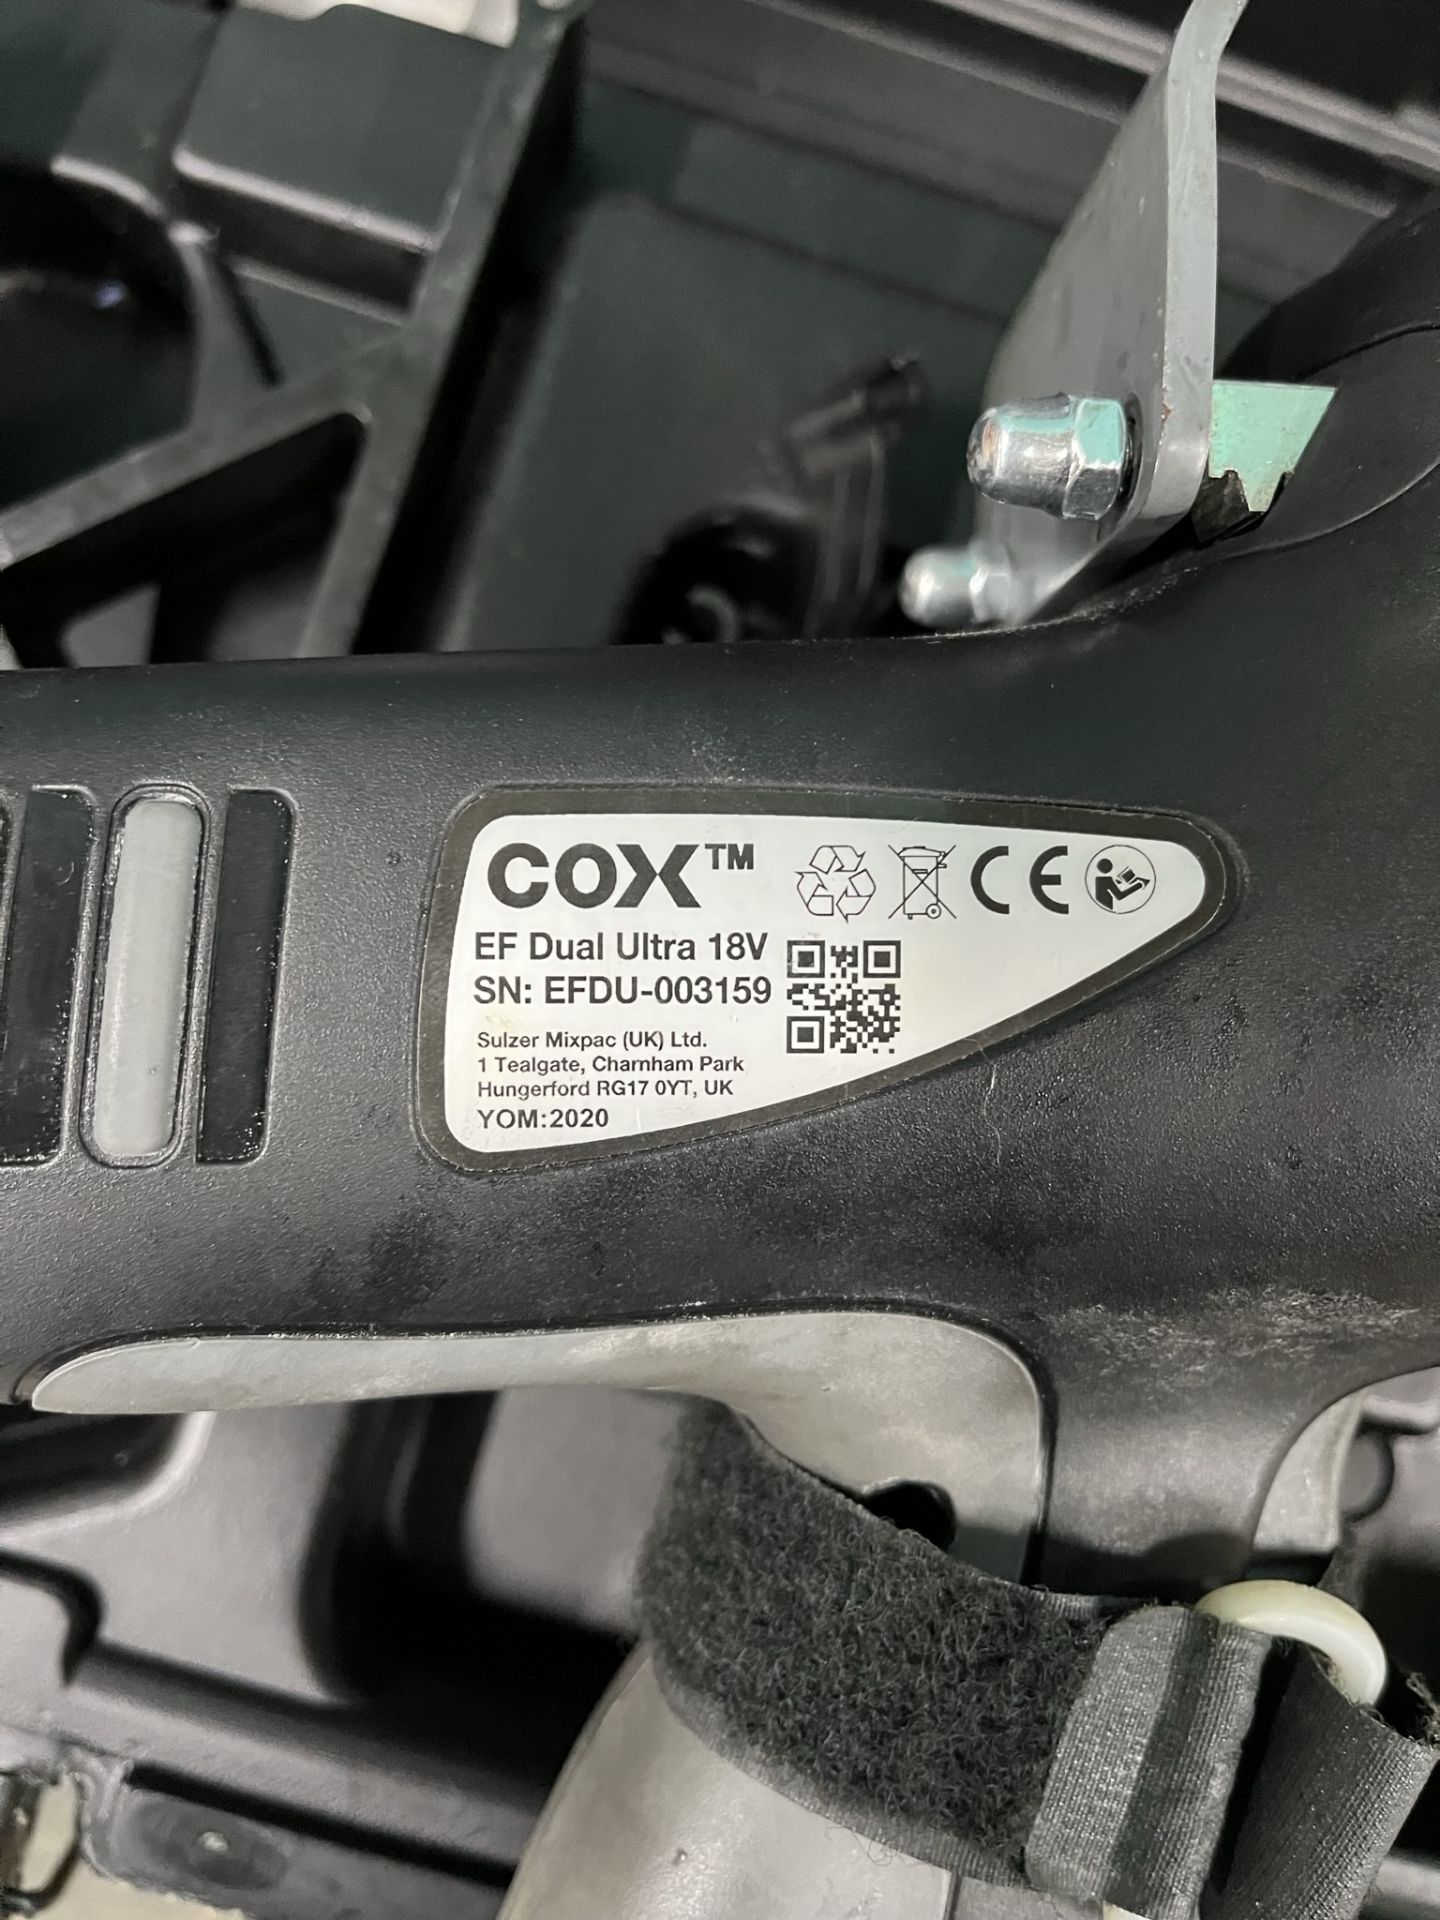 Cox Electraflow Resin Dispenser in Case - Image 4 of 4